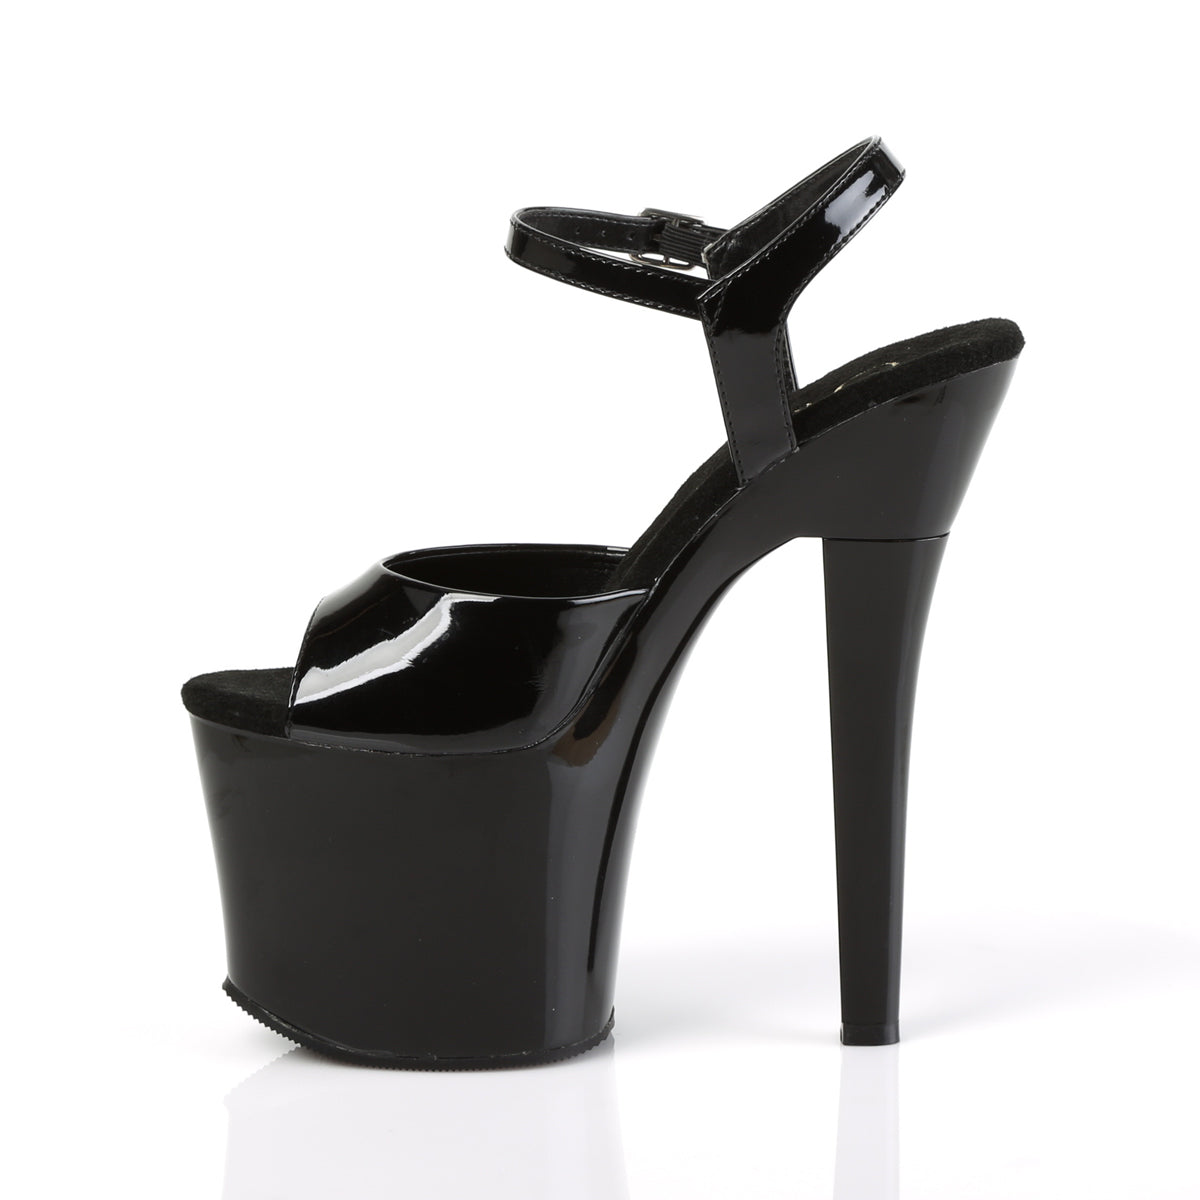 RADIANT-709 7" Heel Black Patent Pole Dancing Platforms-Pleaser- Sexy Shoes Pole Dance Heels